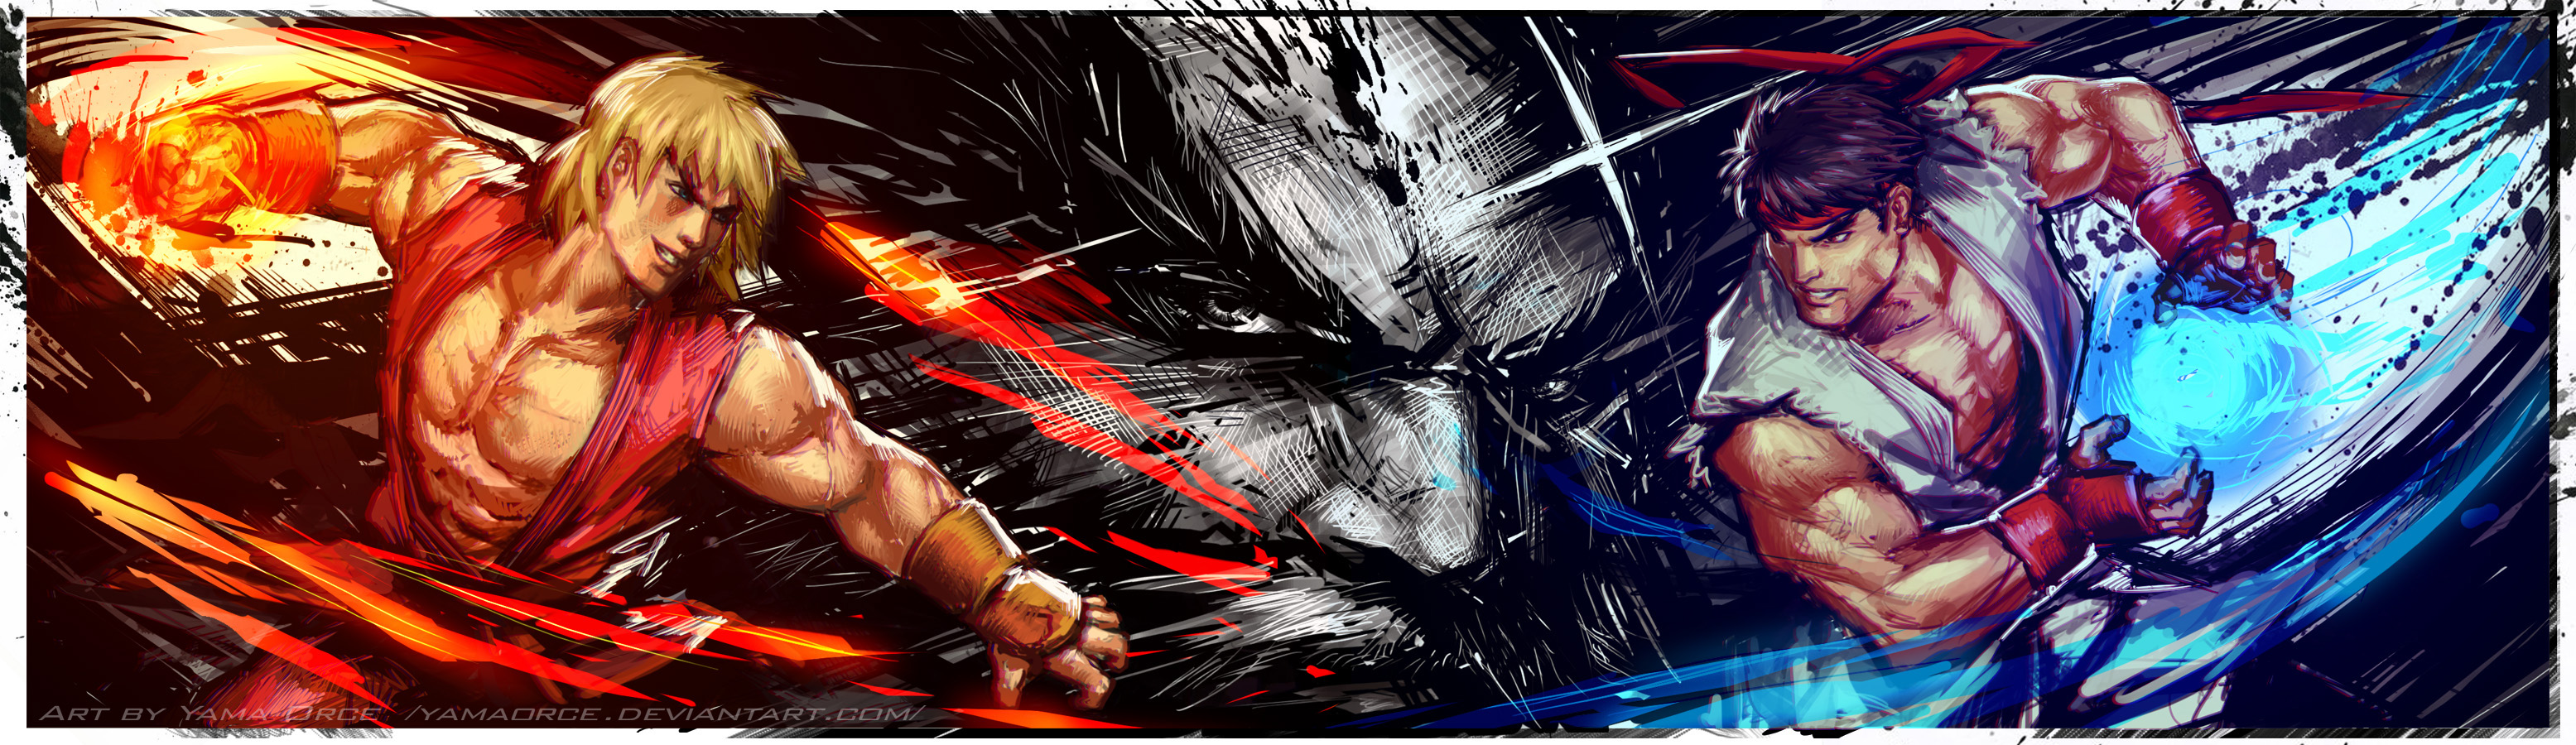 Ryu artwork #4, Street Fighter 4: High resolution